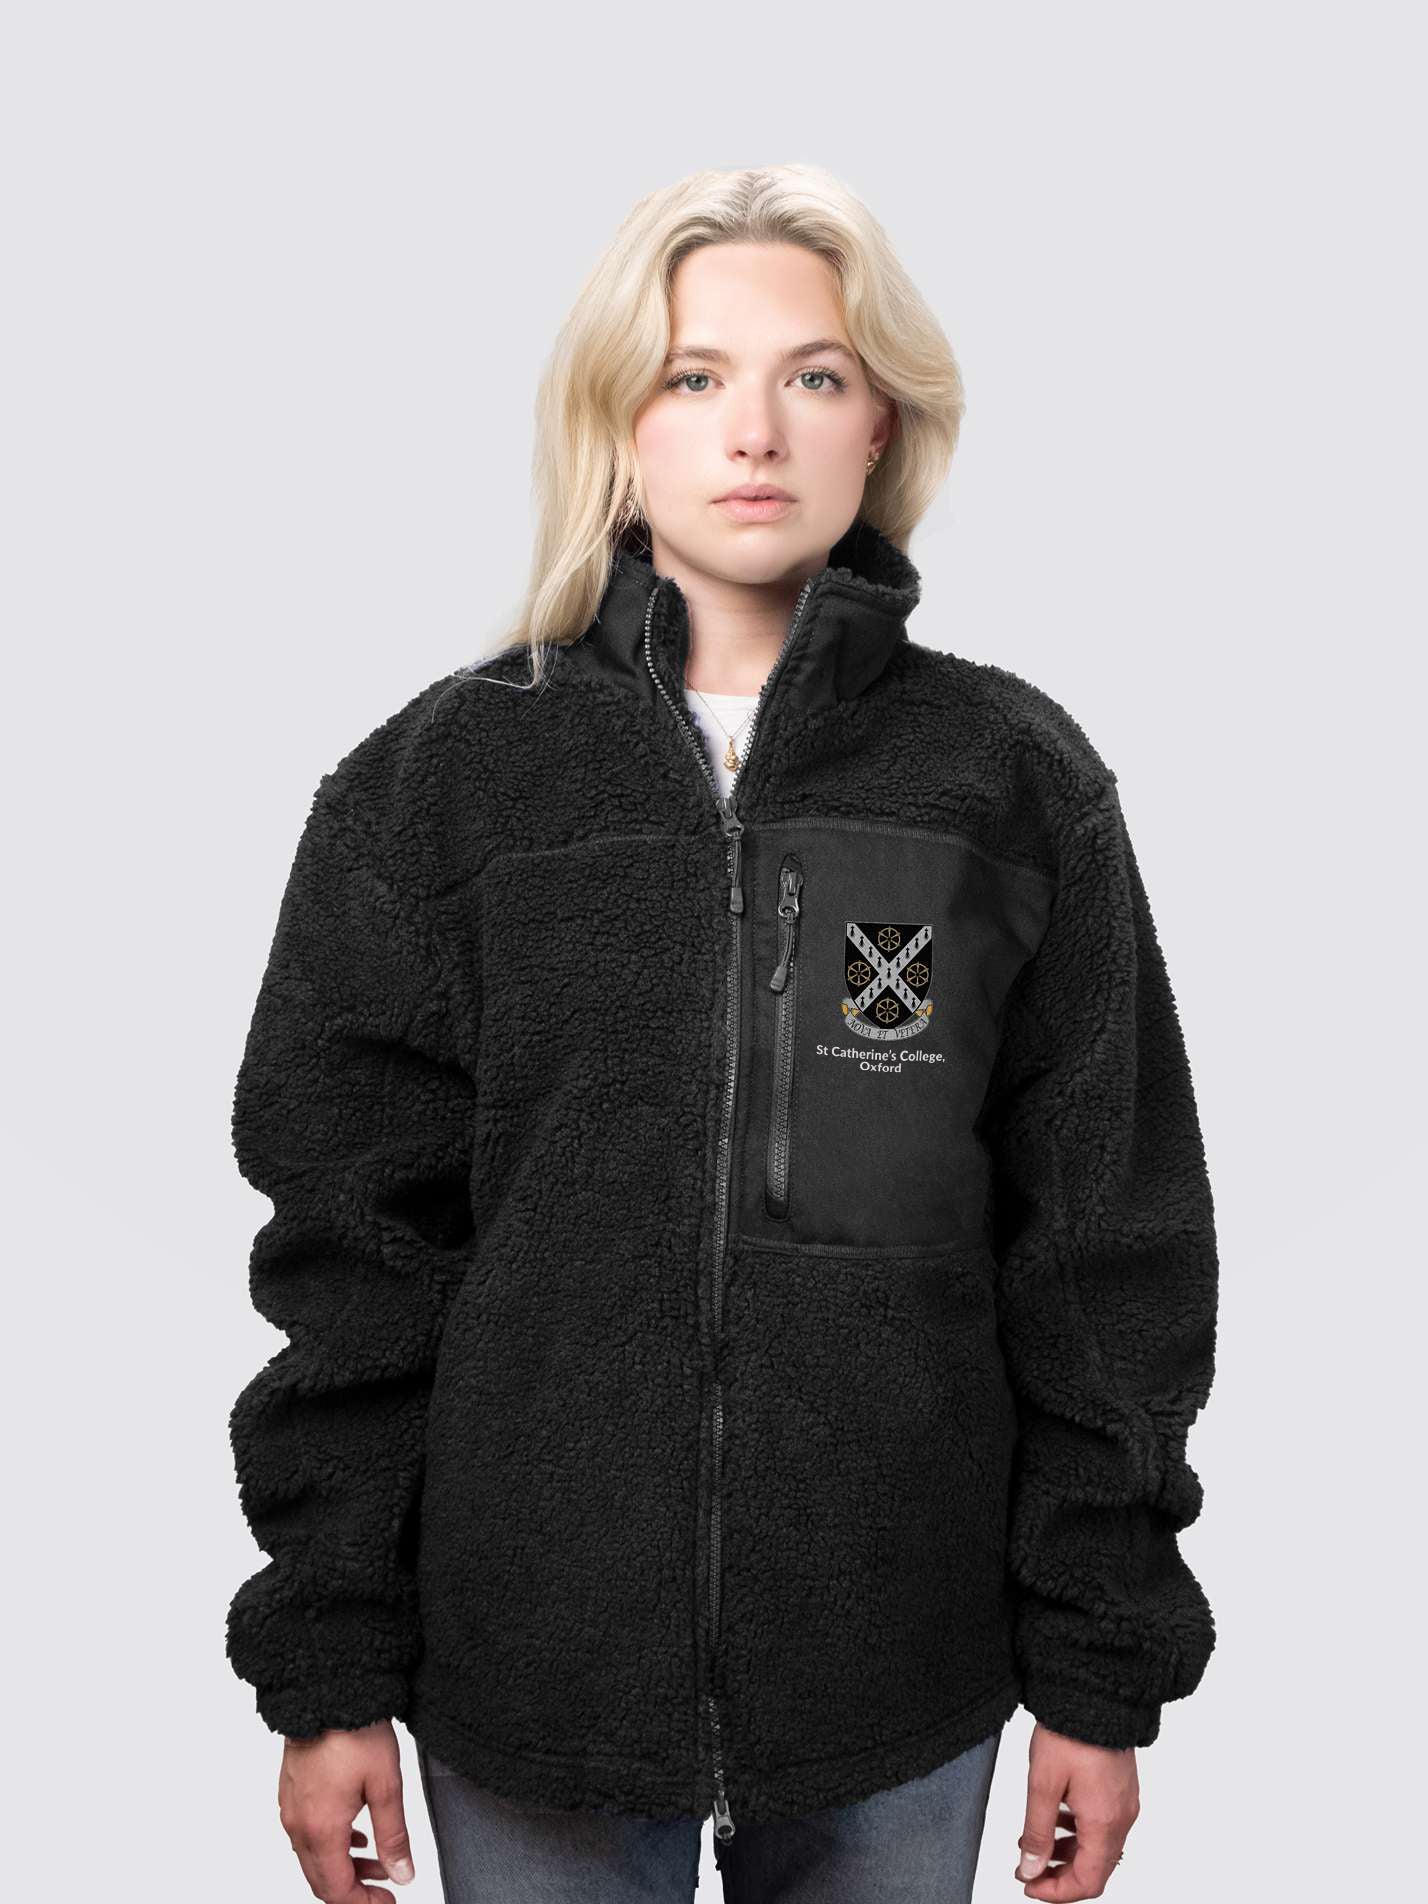 St Catherine's College Oxford MCR Unisex Fluffy Sherpa Fleece Jacket